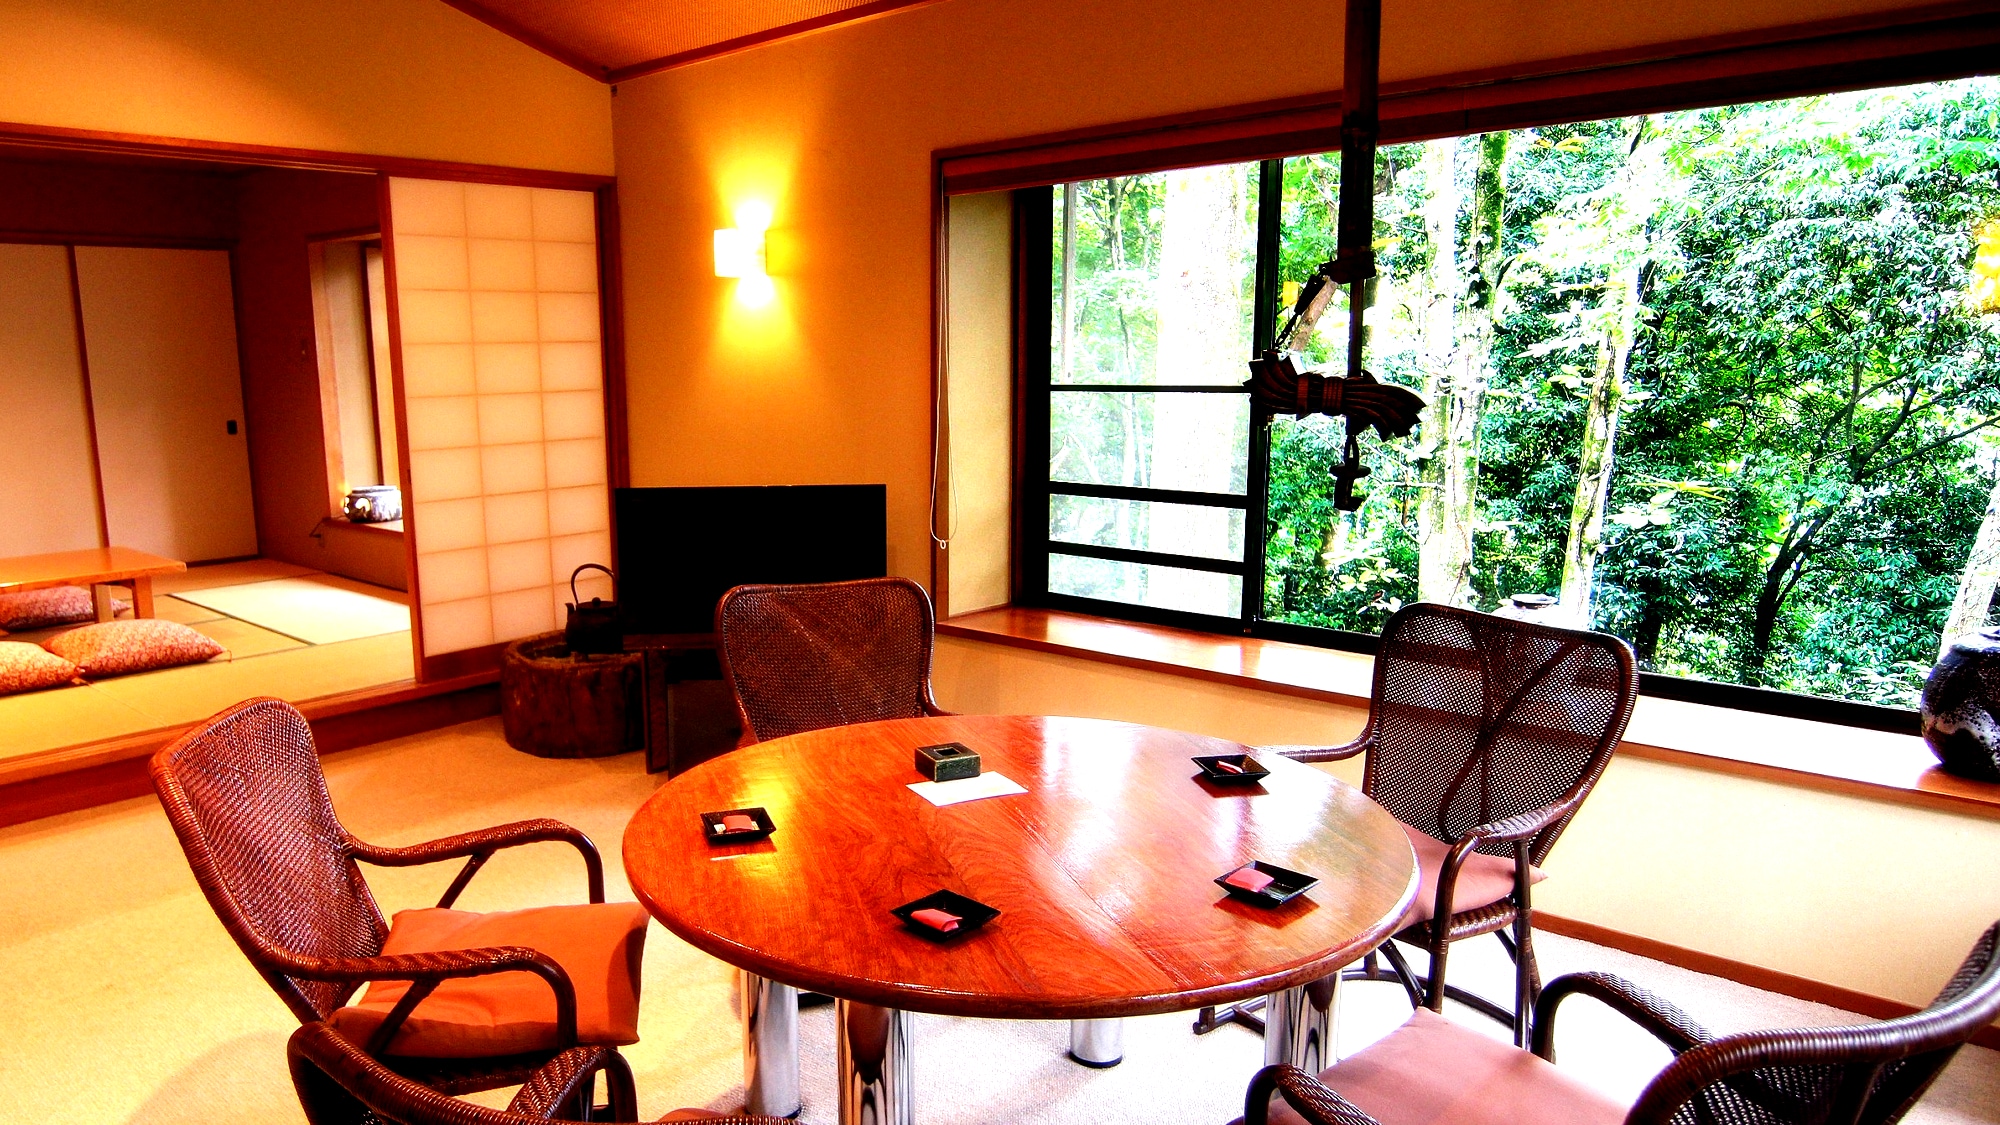 ◆ "Mori-an" lounge